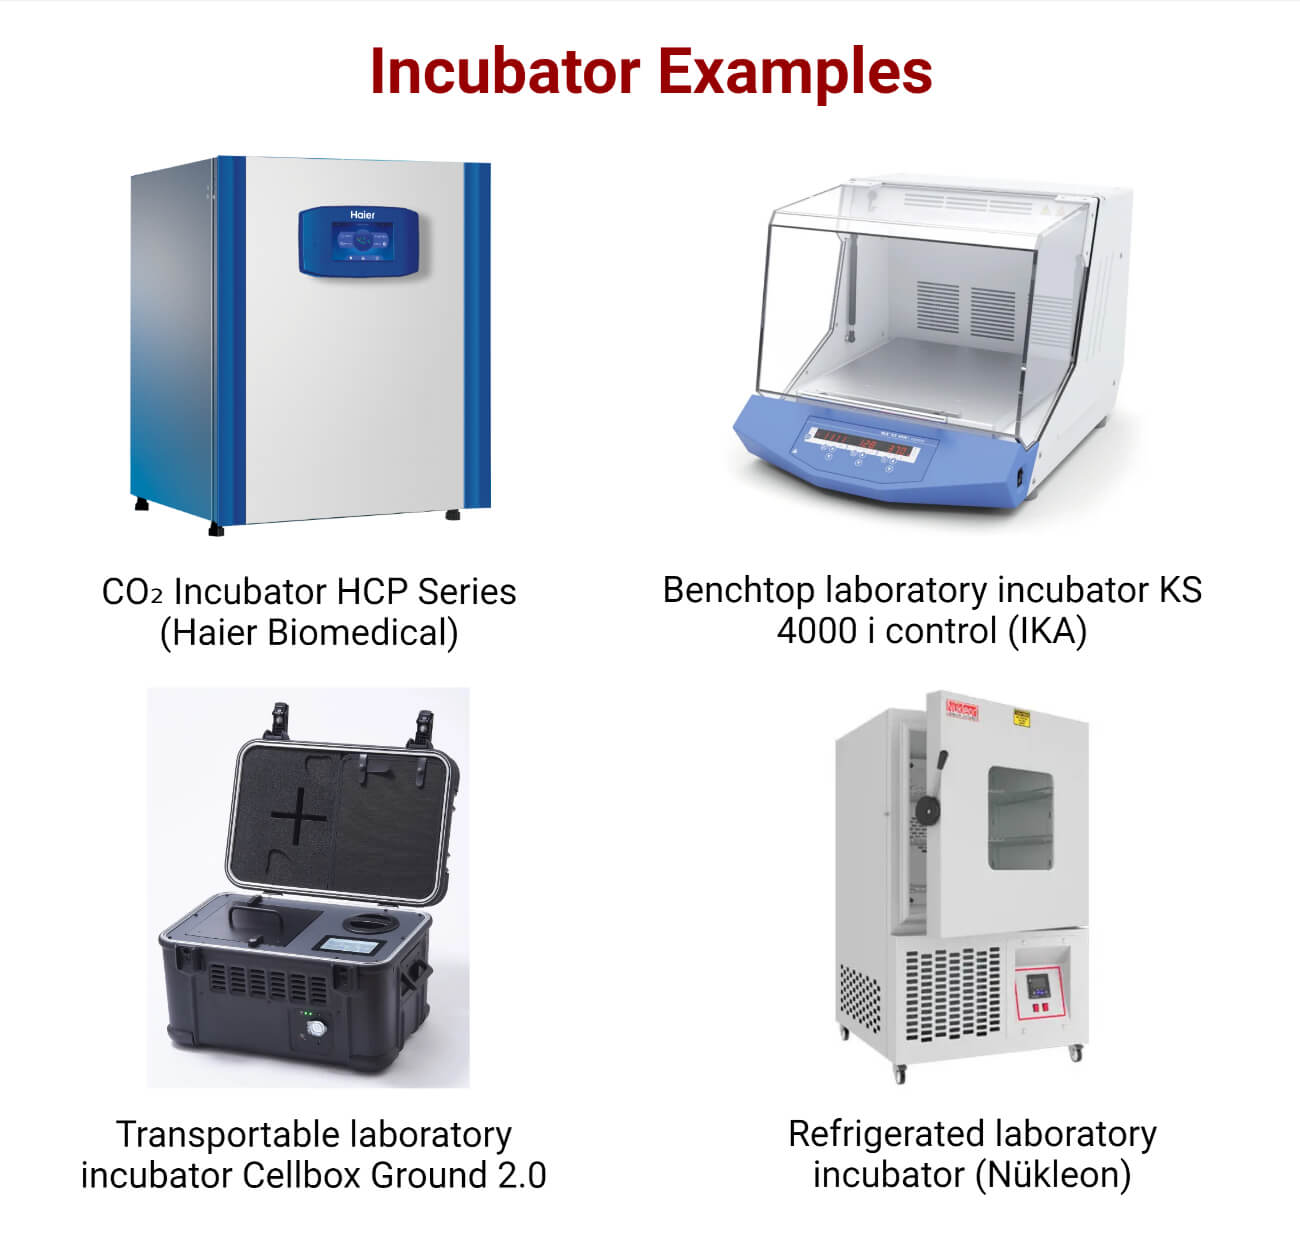 Incubator Examples